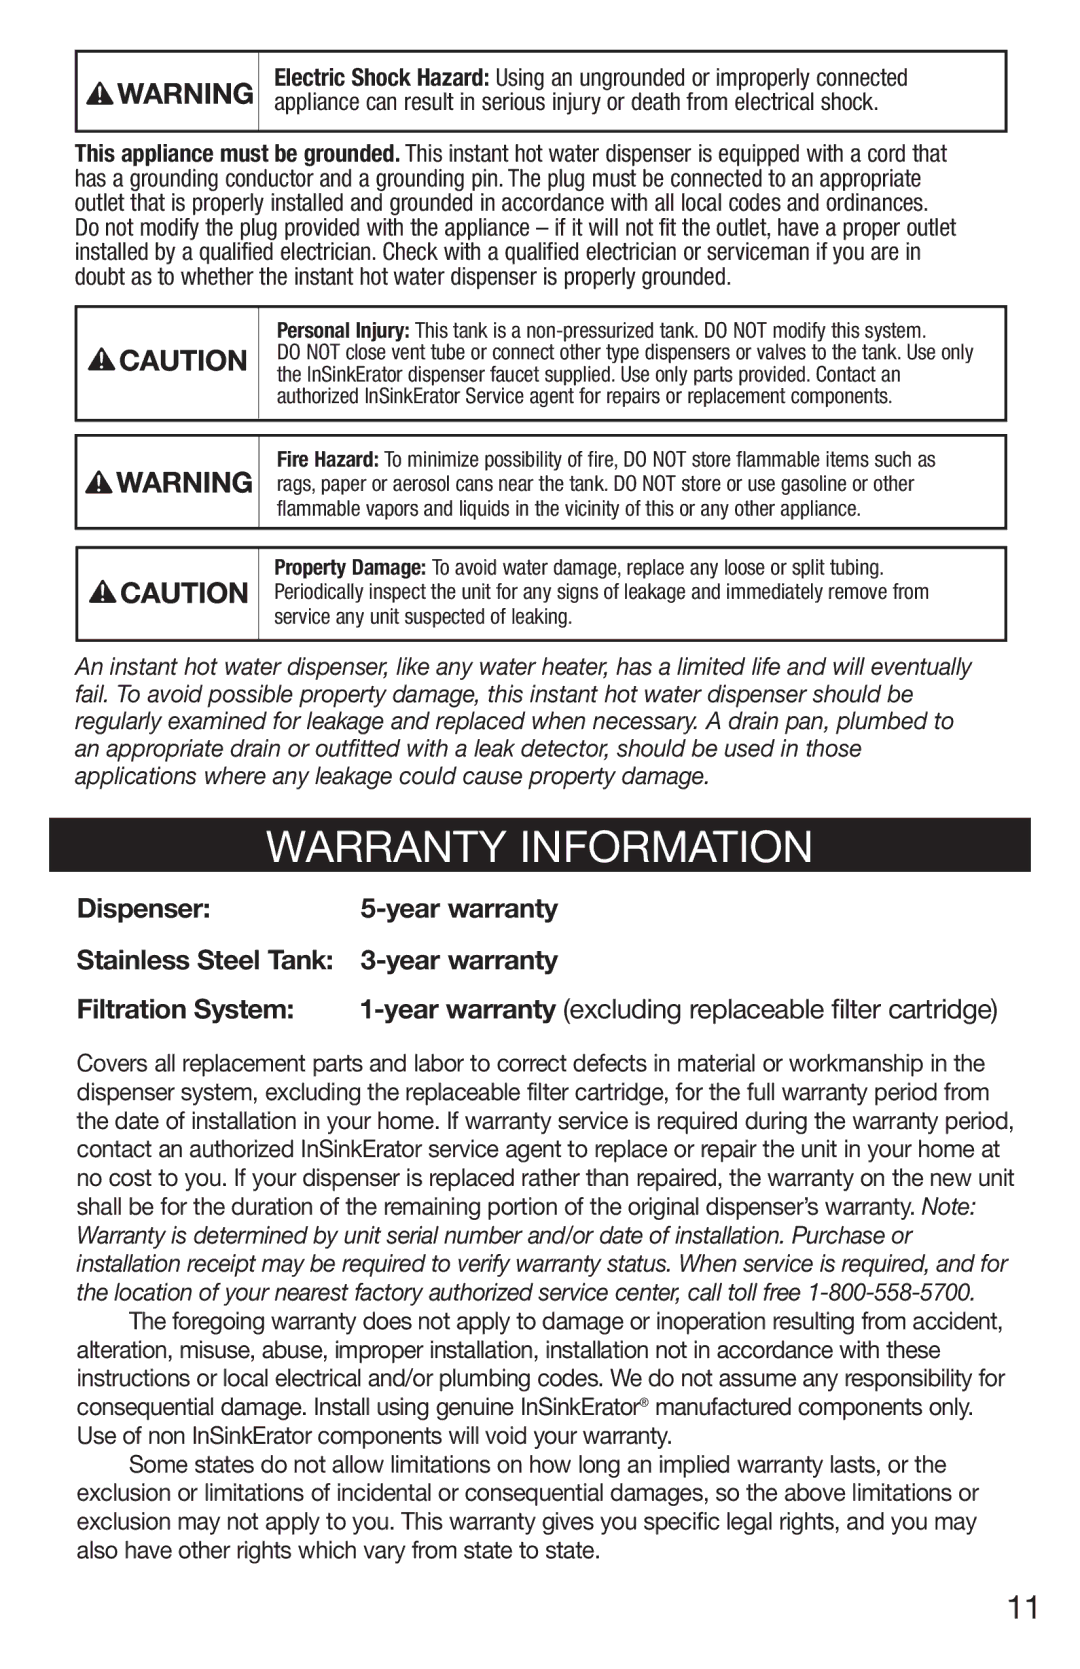 InSinkErator 1100 owner manual Warranty Information, Year warranty excluding replaceable filter cartridge 